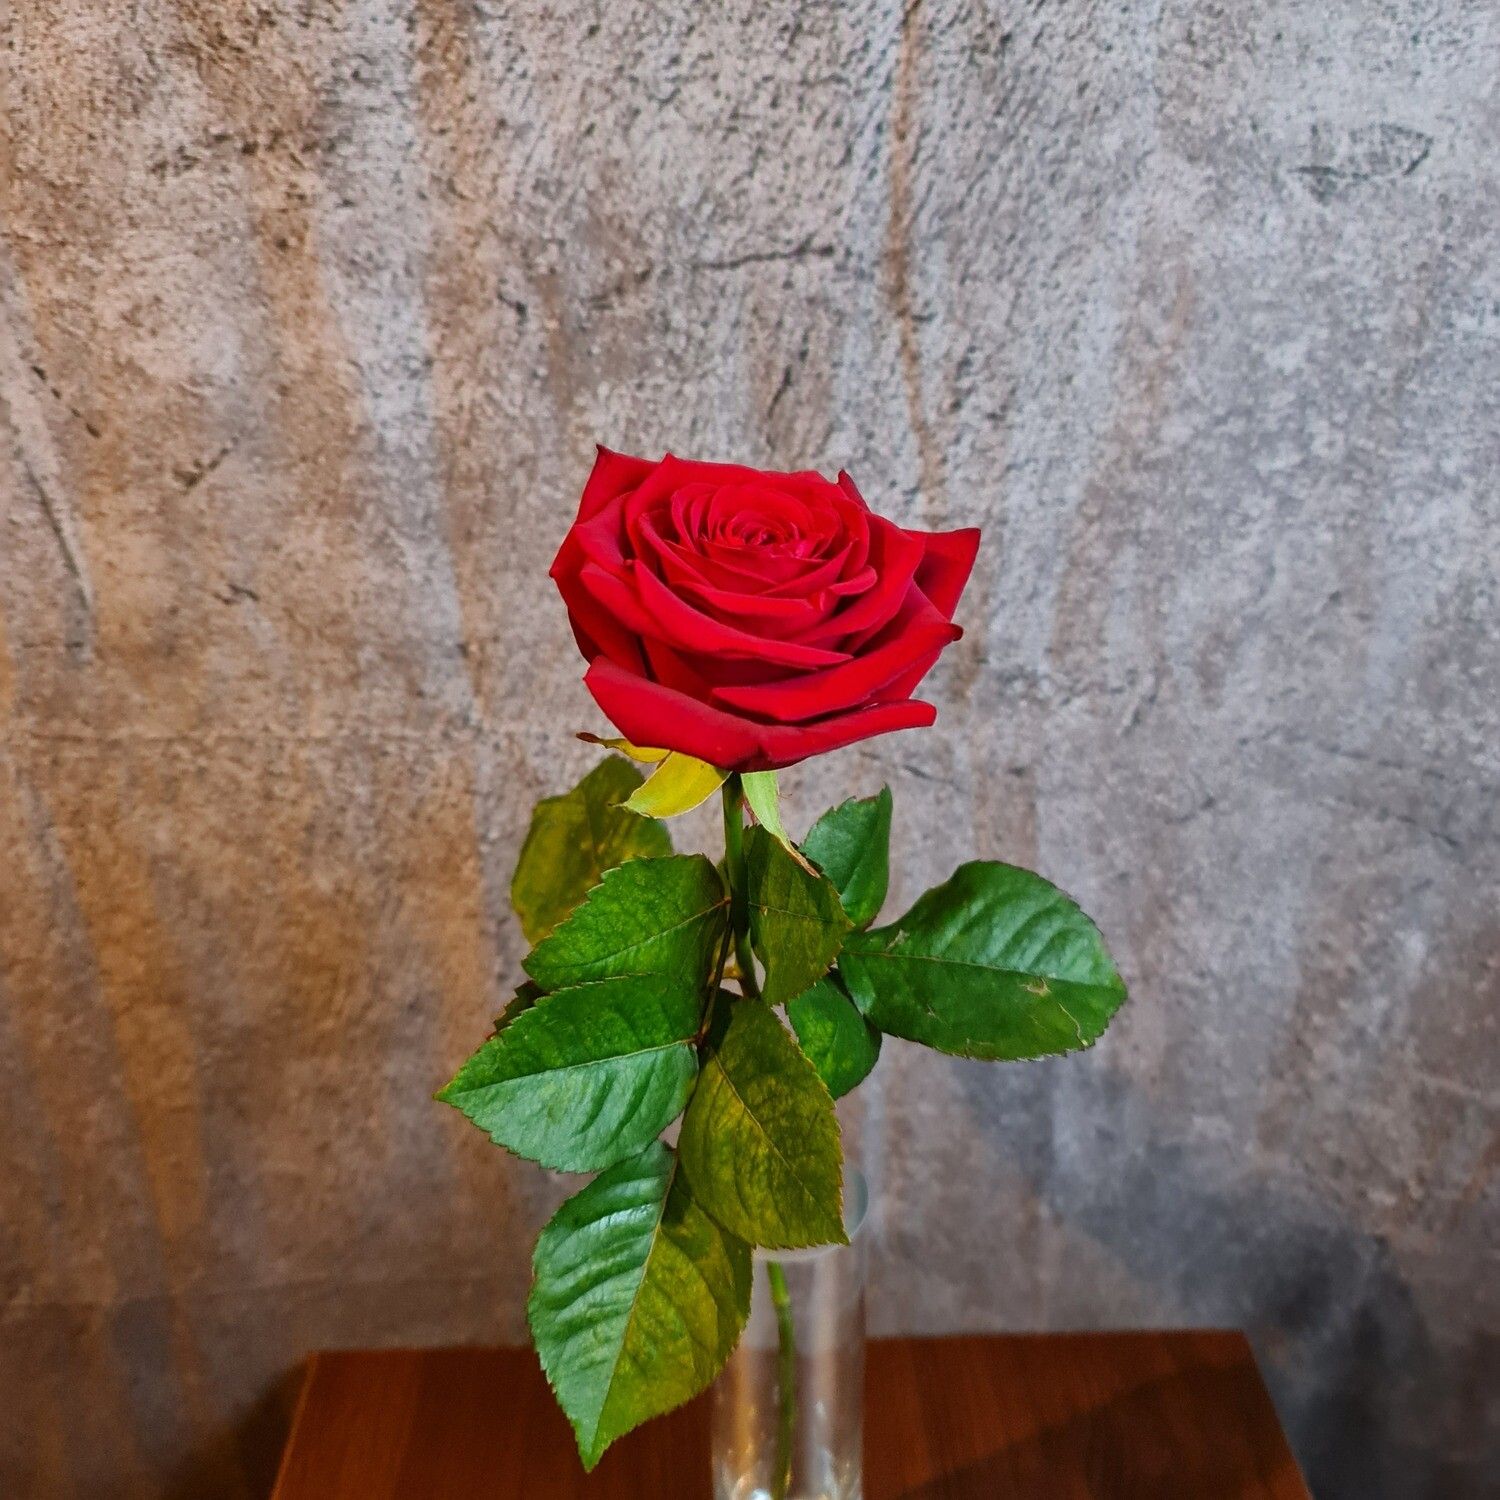  Rote Rosen Hintergrundbild 1500x1500. Rote Rose(n) (Menge wählbar)